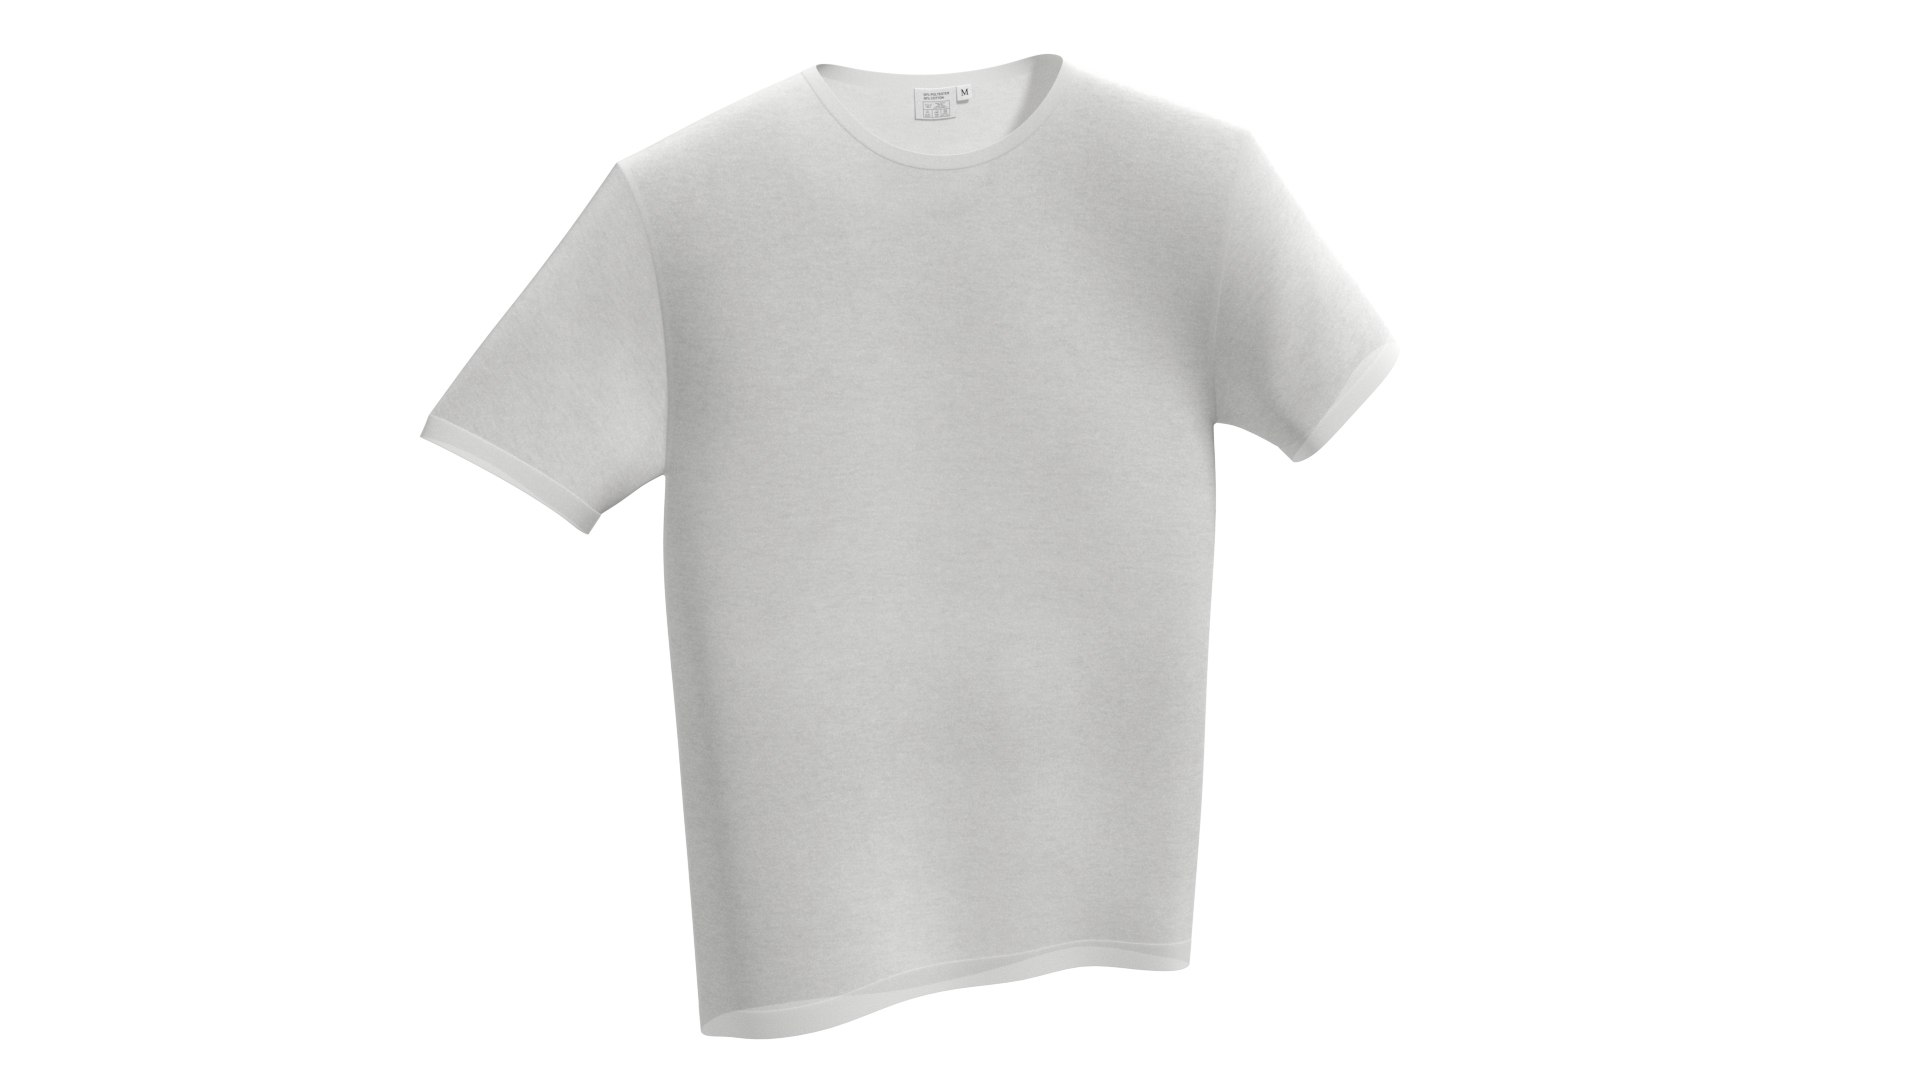 3D T-Shirt White model - TurboSquid 2051041